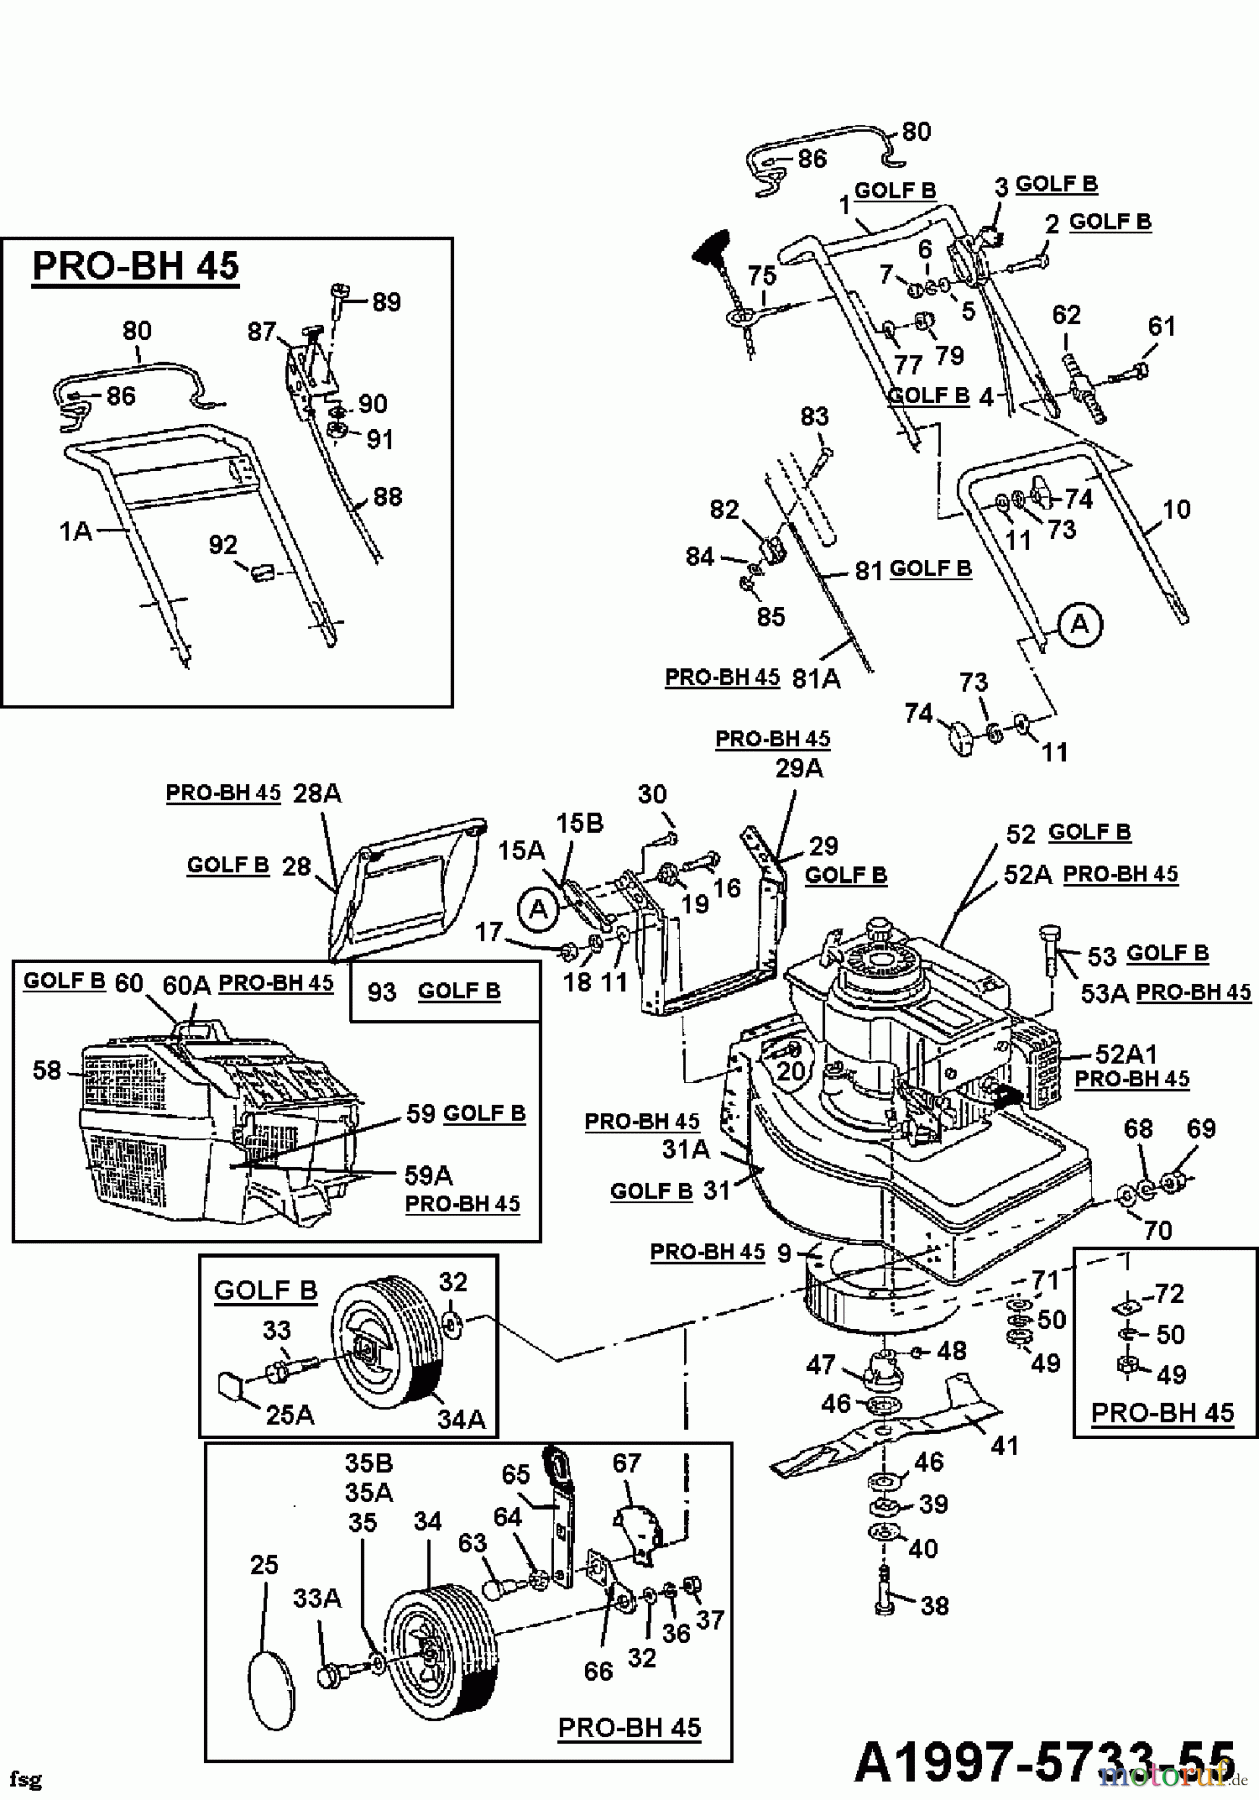  Golf Petrol mower Golf B 04060.09  (1997) Basic machine